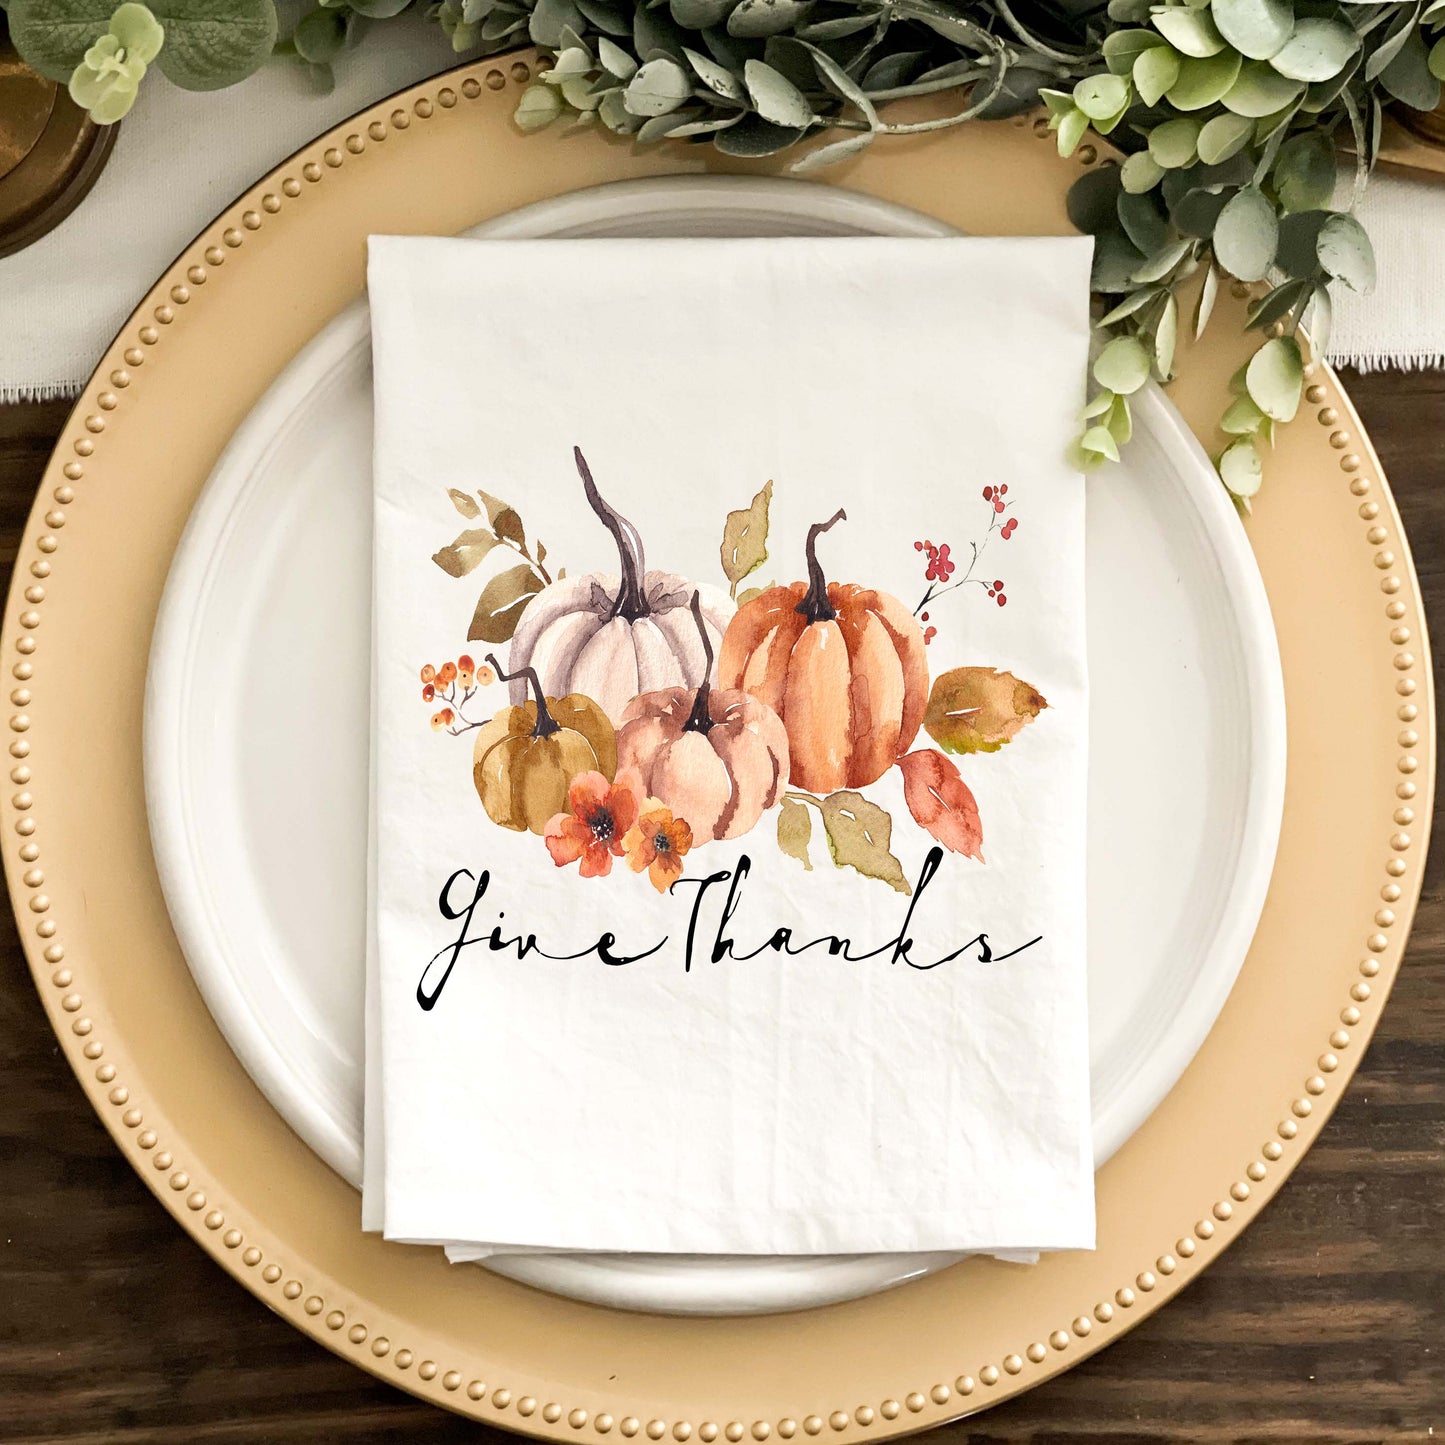 Watercolor Pumpkin Napkins - Give Thanks or Hello Fall